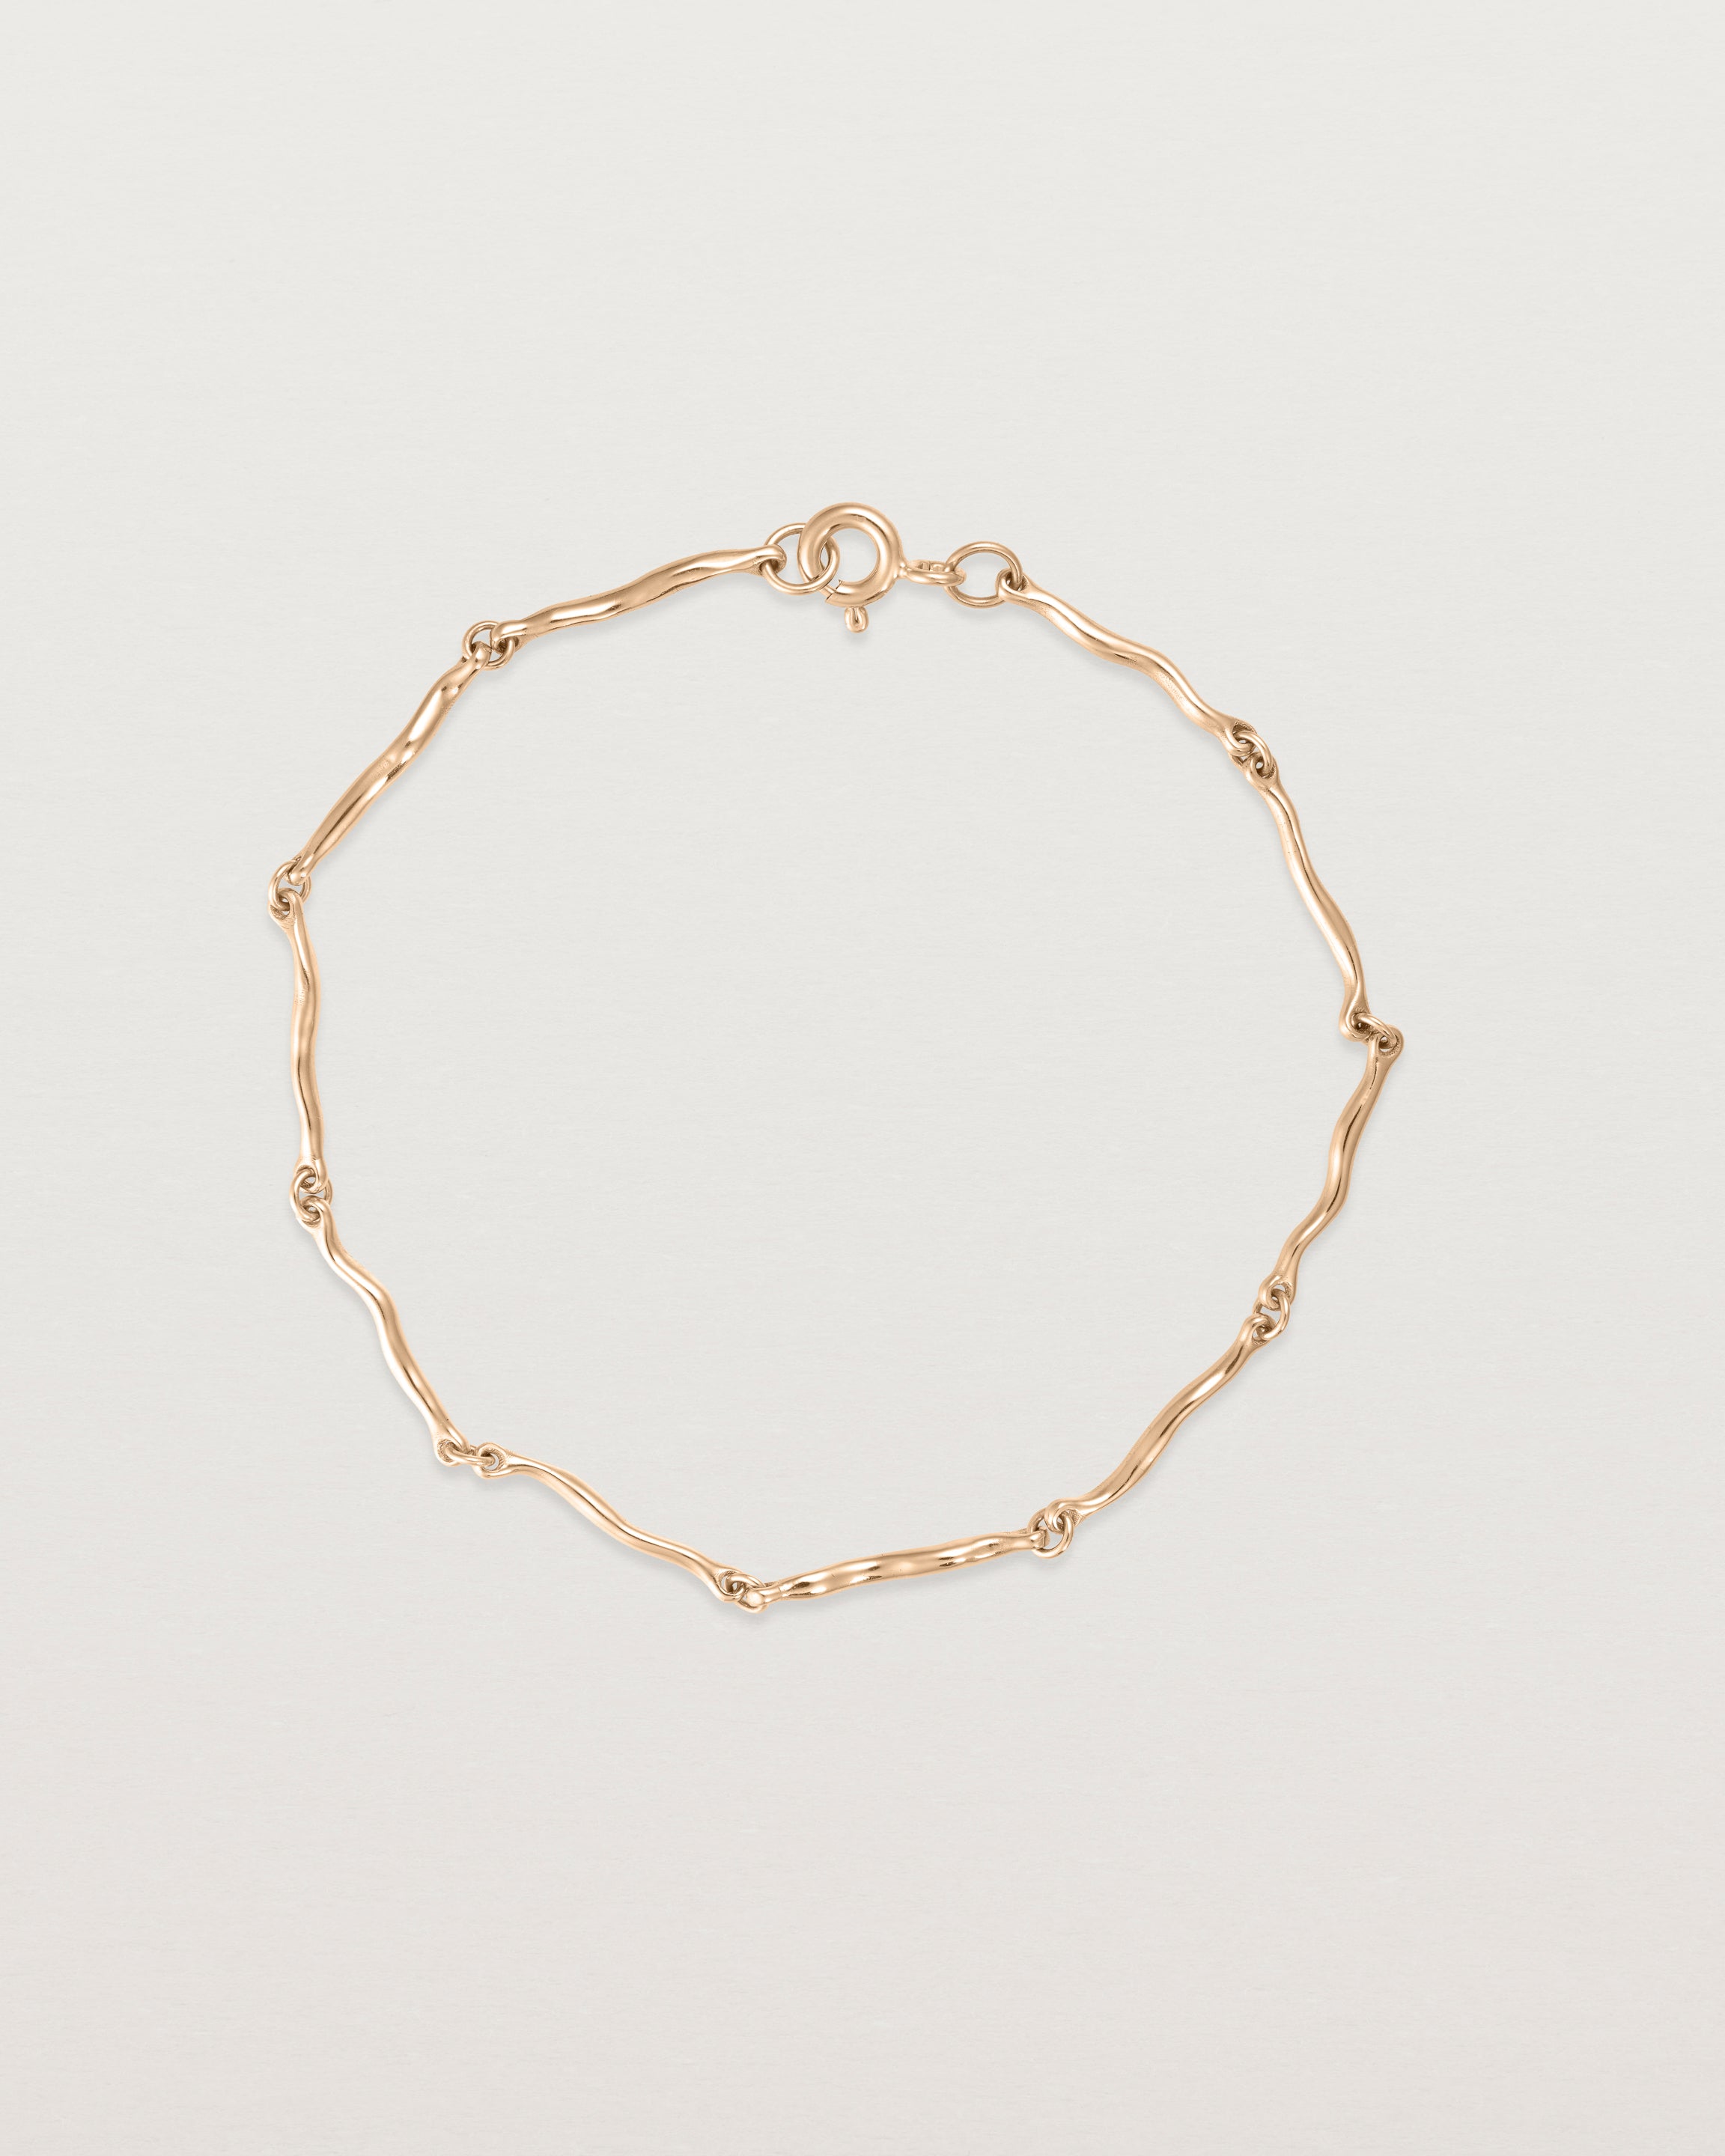 Shop Bracelets, Bangles & Handmade Jewellery | Natalie Marie Jewellery